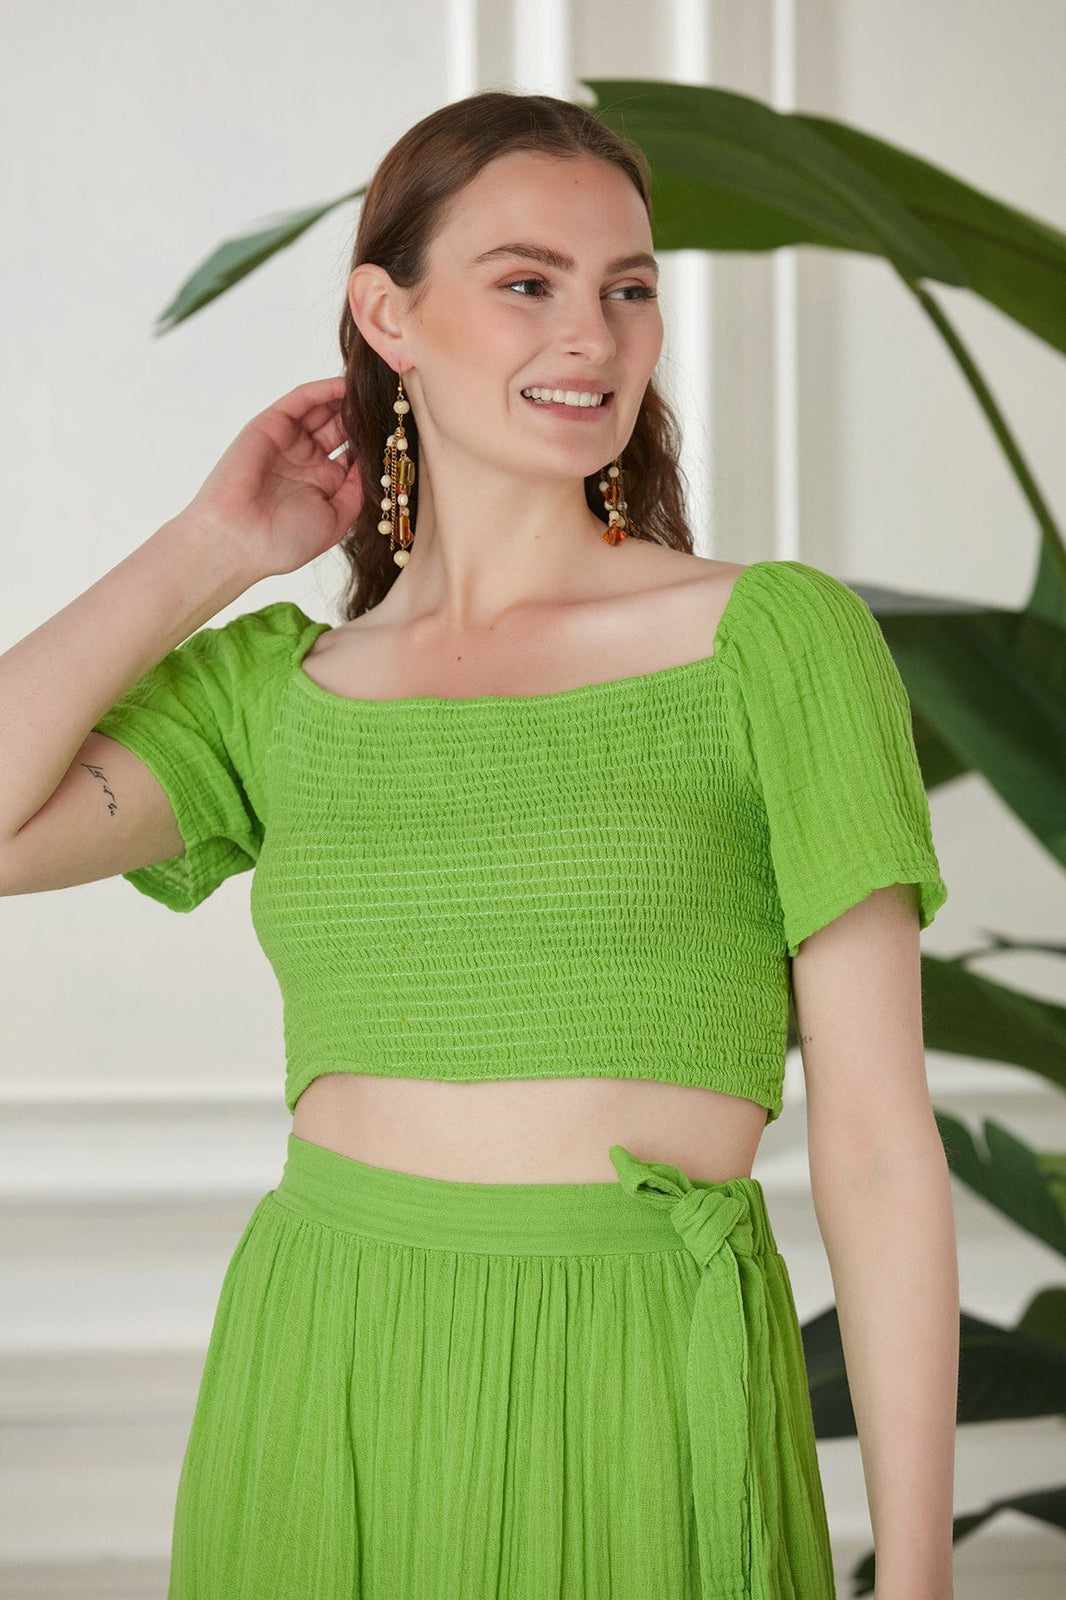 Begonville Sets Ava Crop Top & Skirt Cotton Set - Green